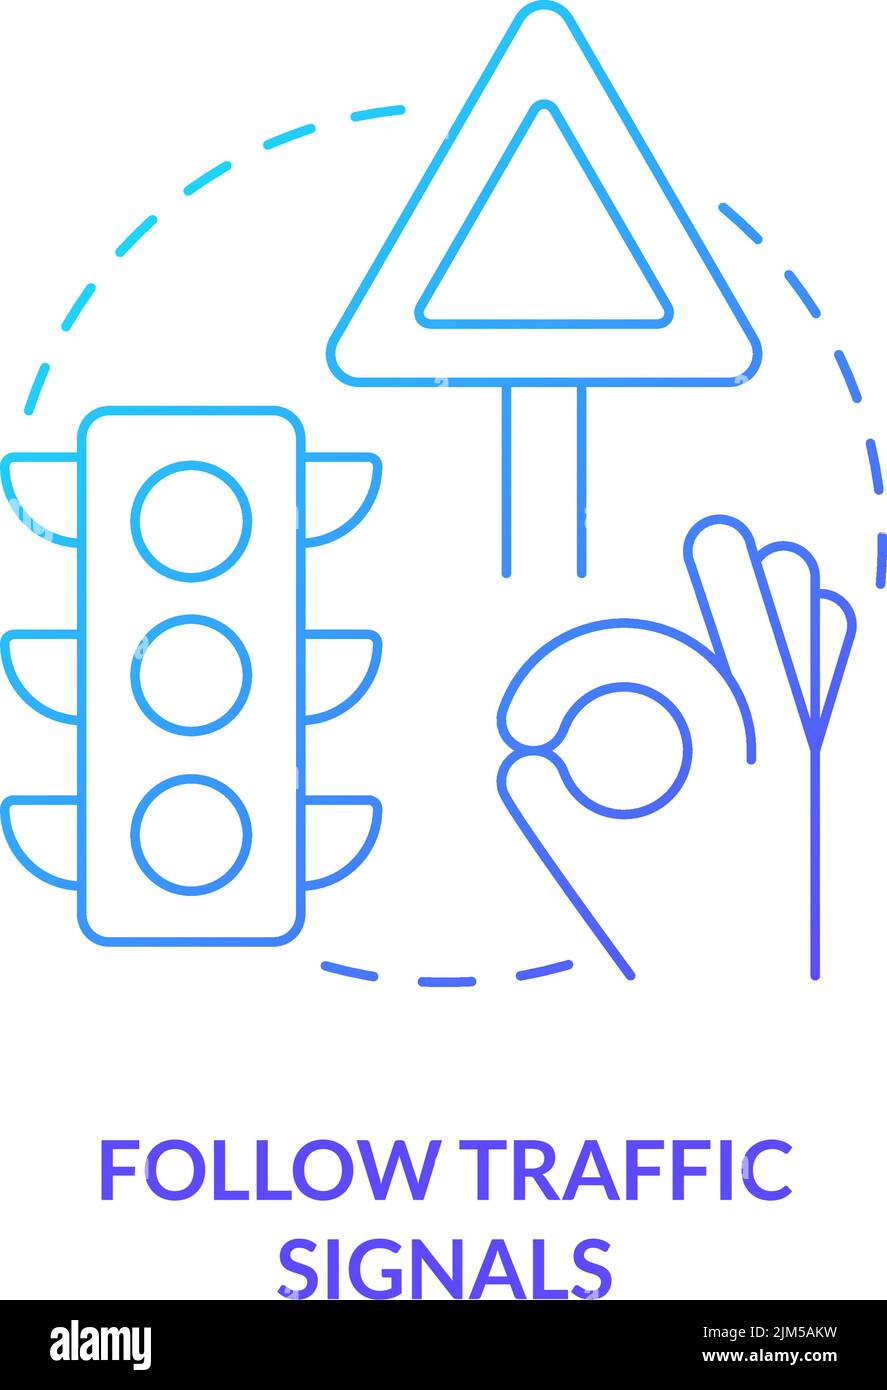 Follow traffic signals blue gradient concept icon Stock Vector